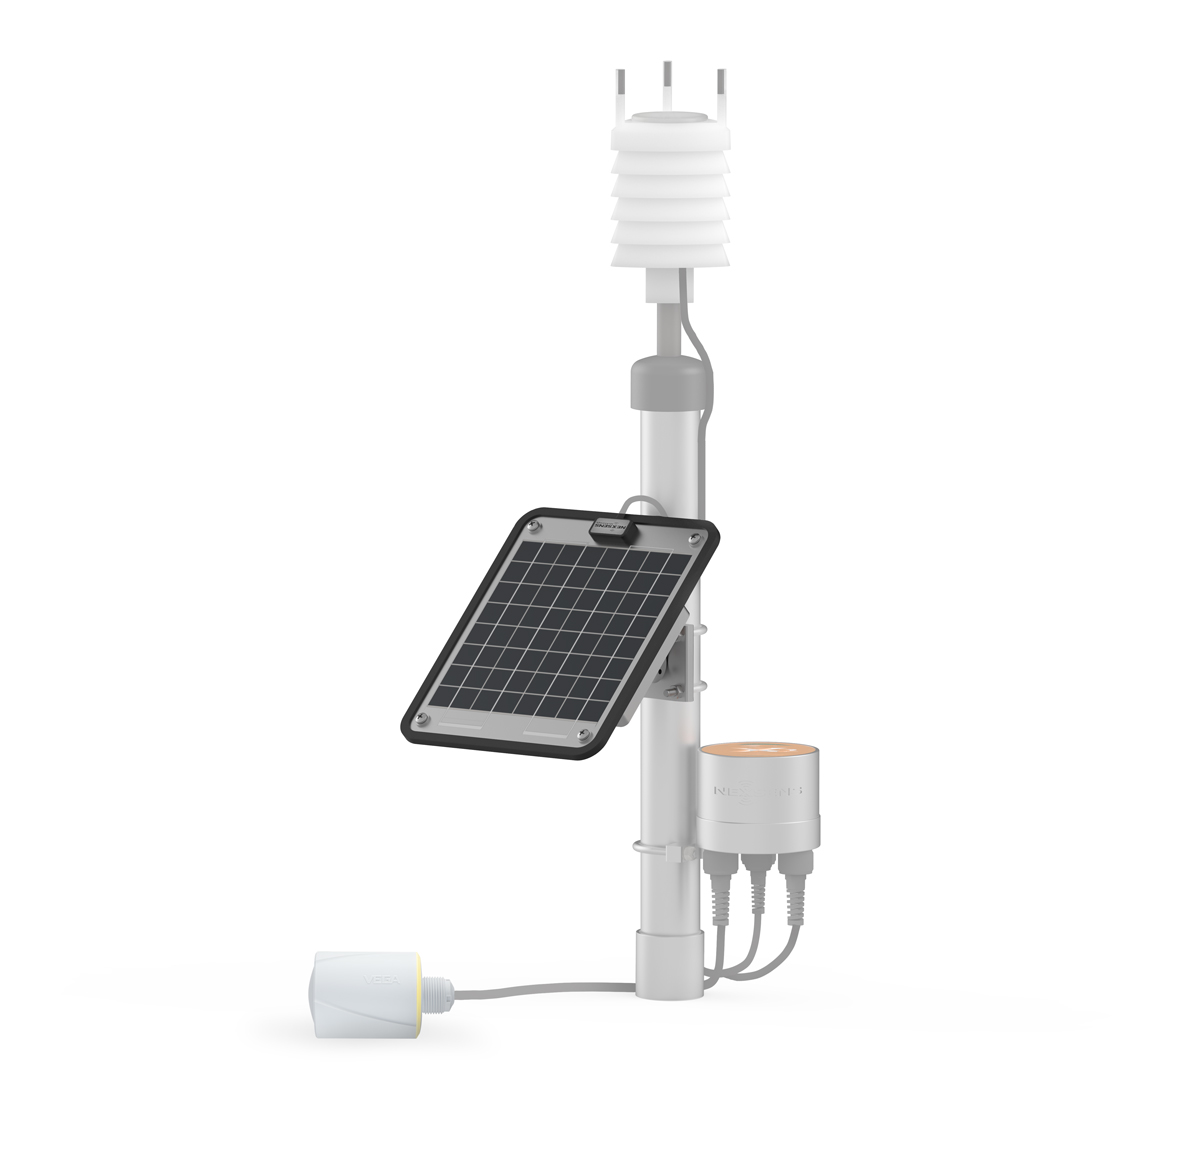 NexSens SP-Series Solar Power Packs